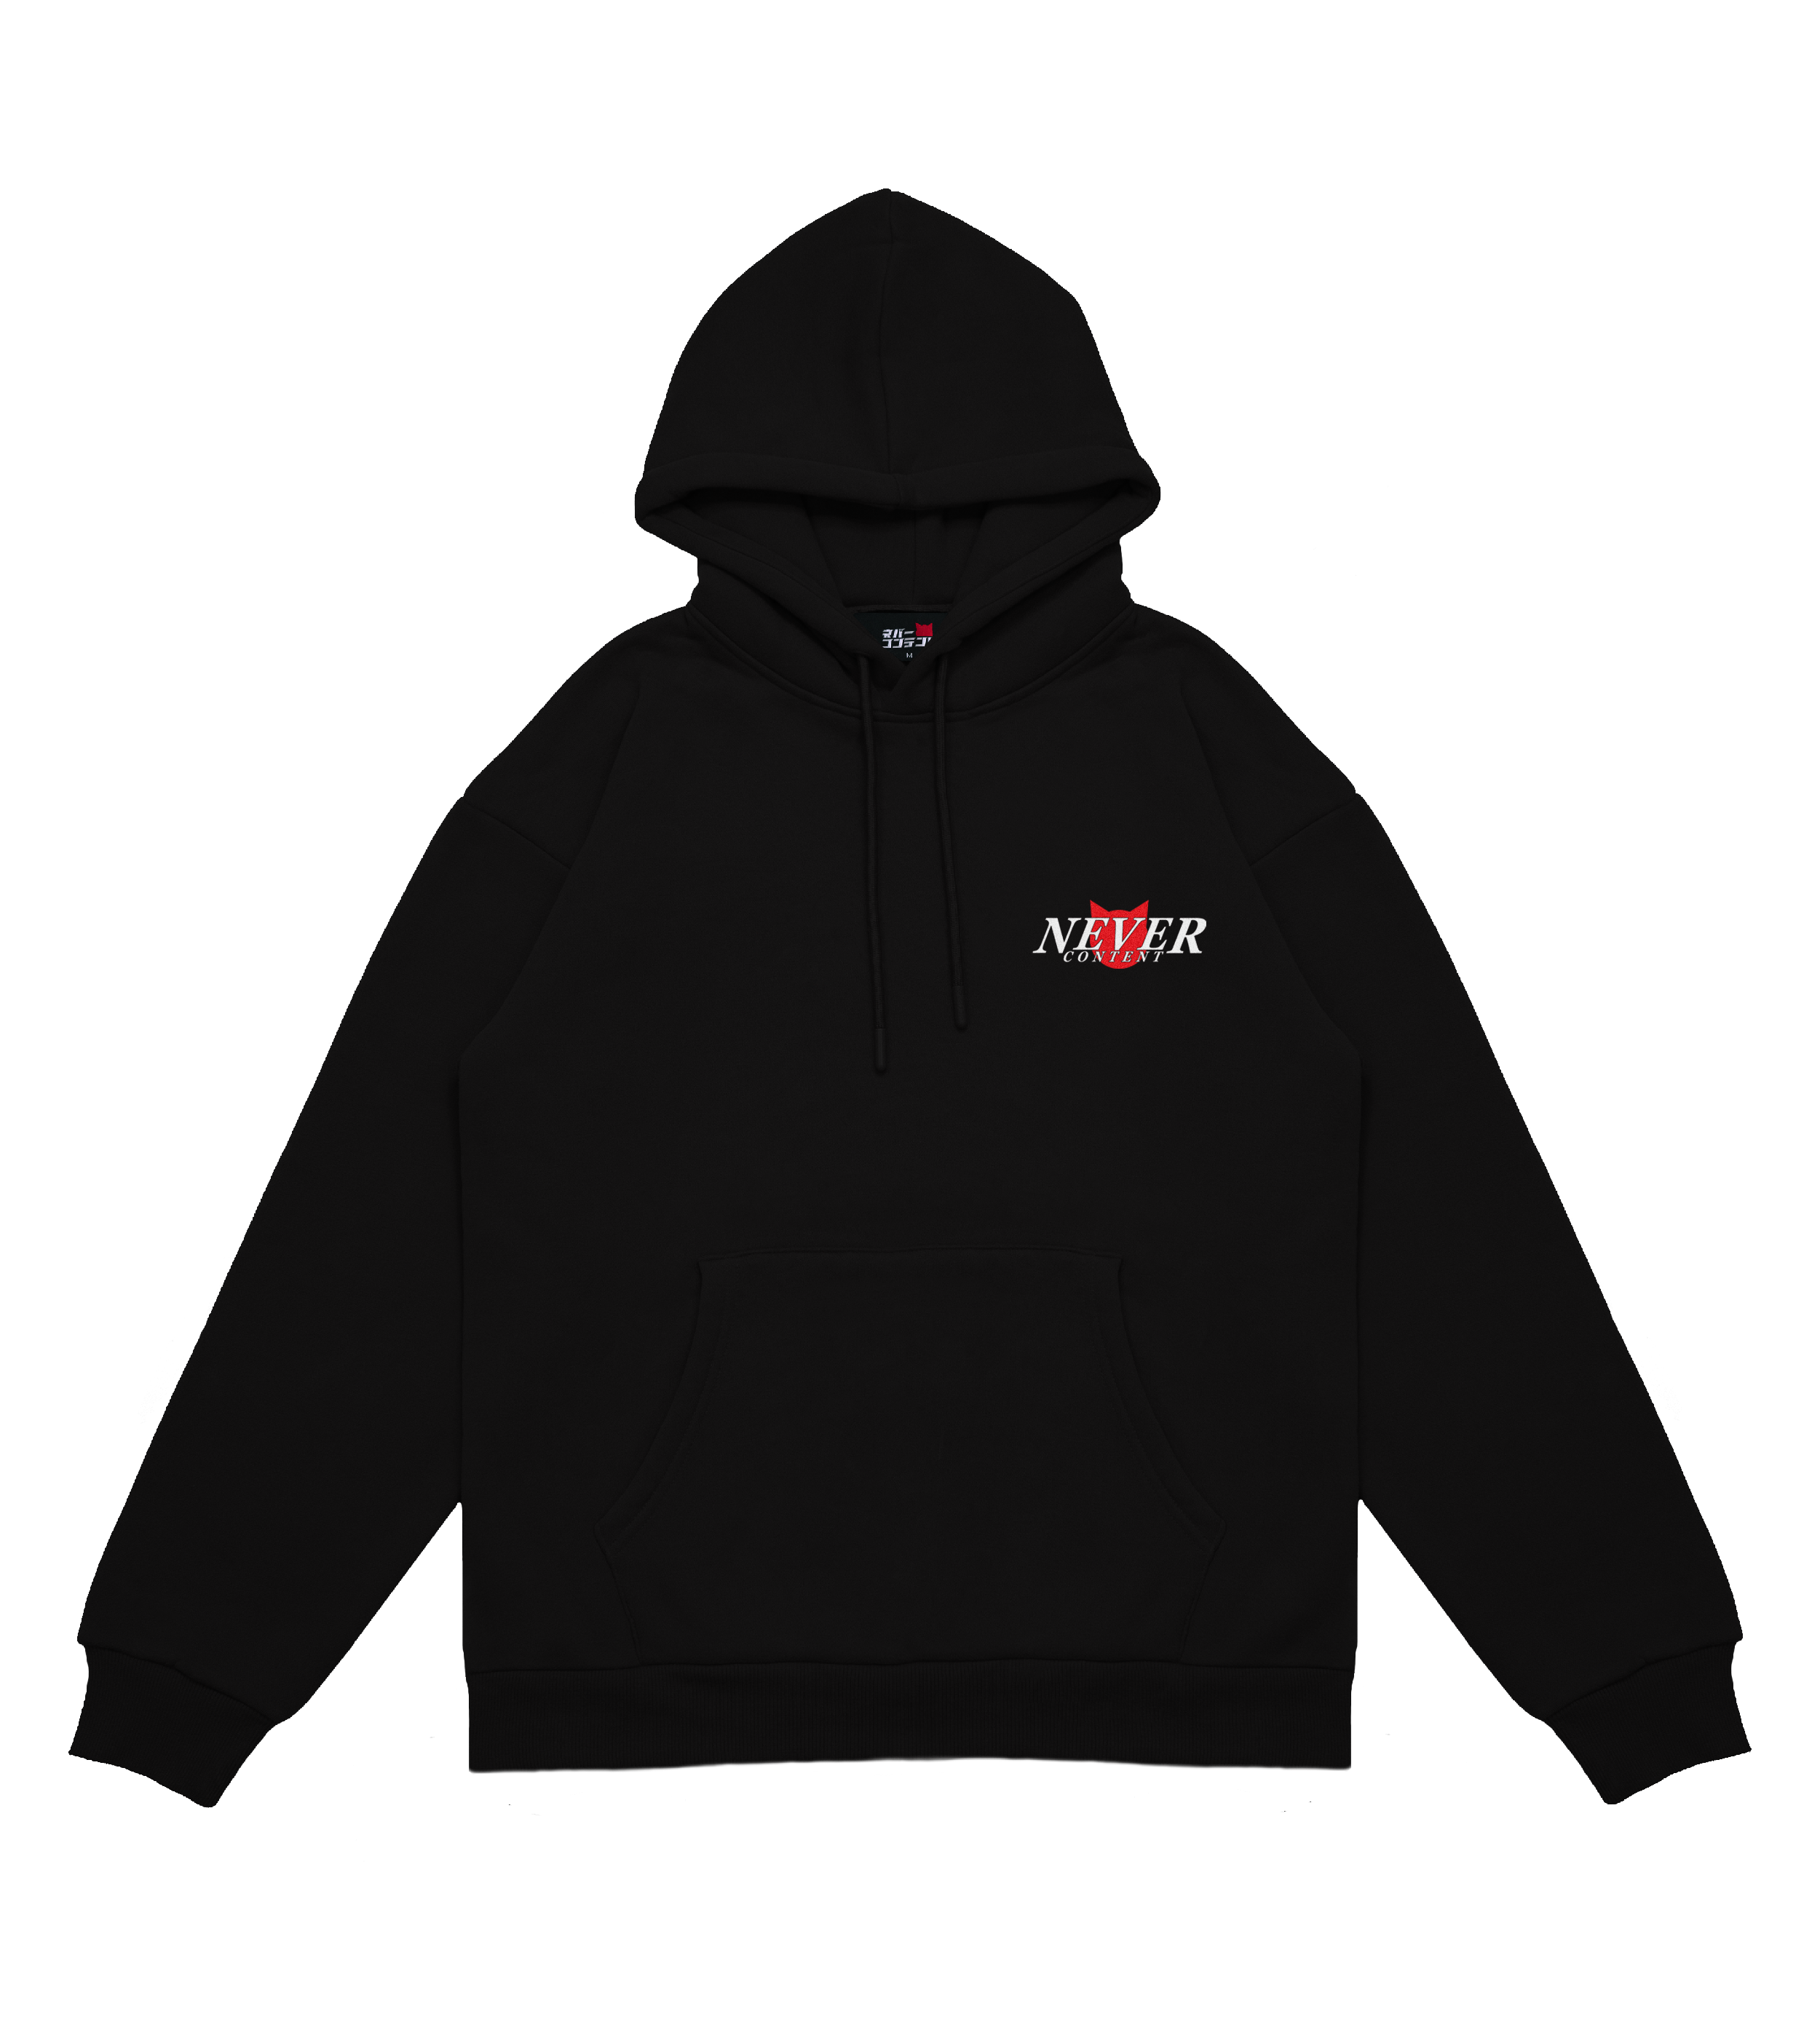 Style Boutique - Black Hooded Sweatshirt